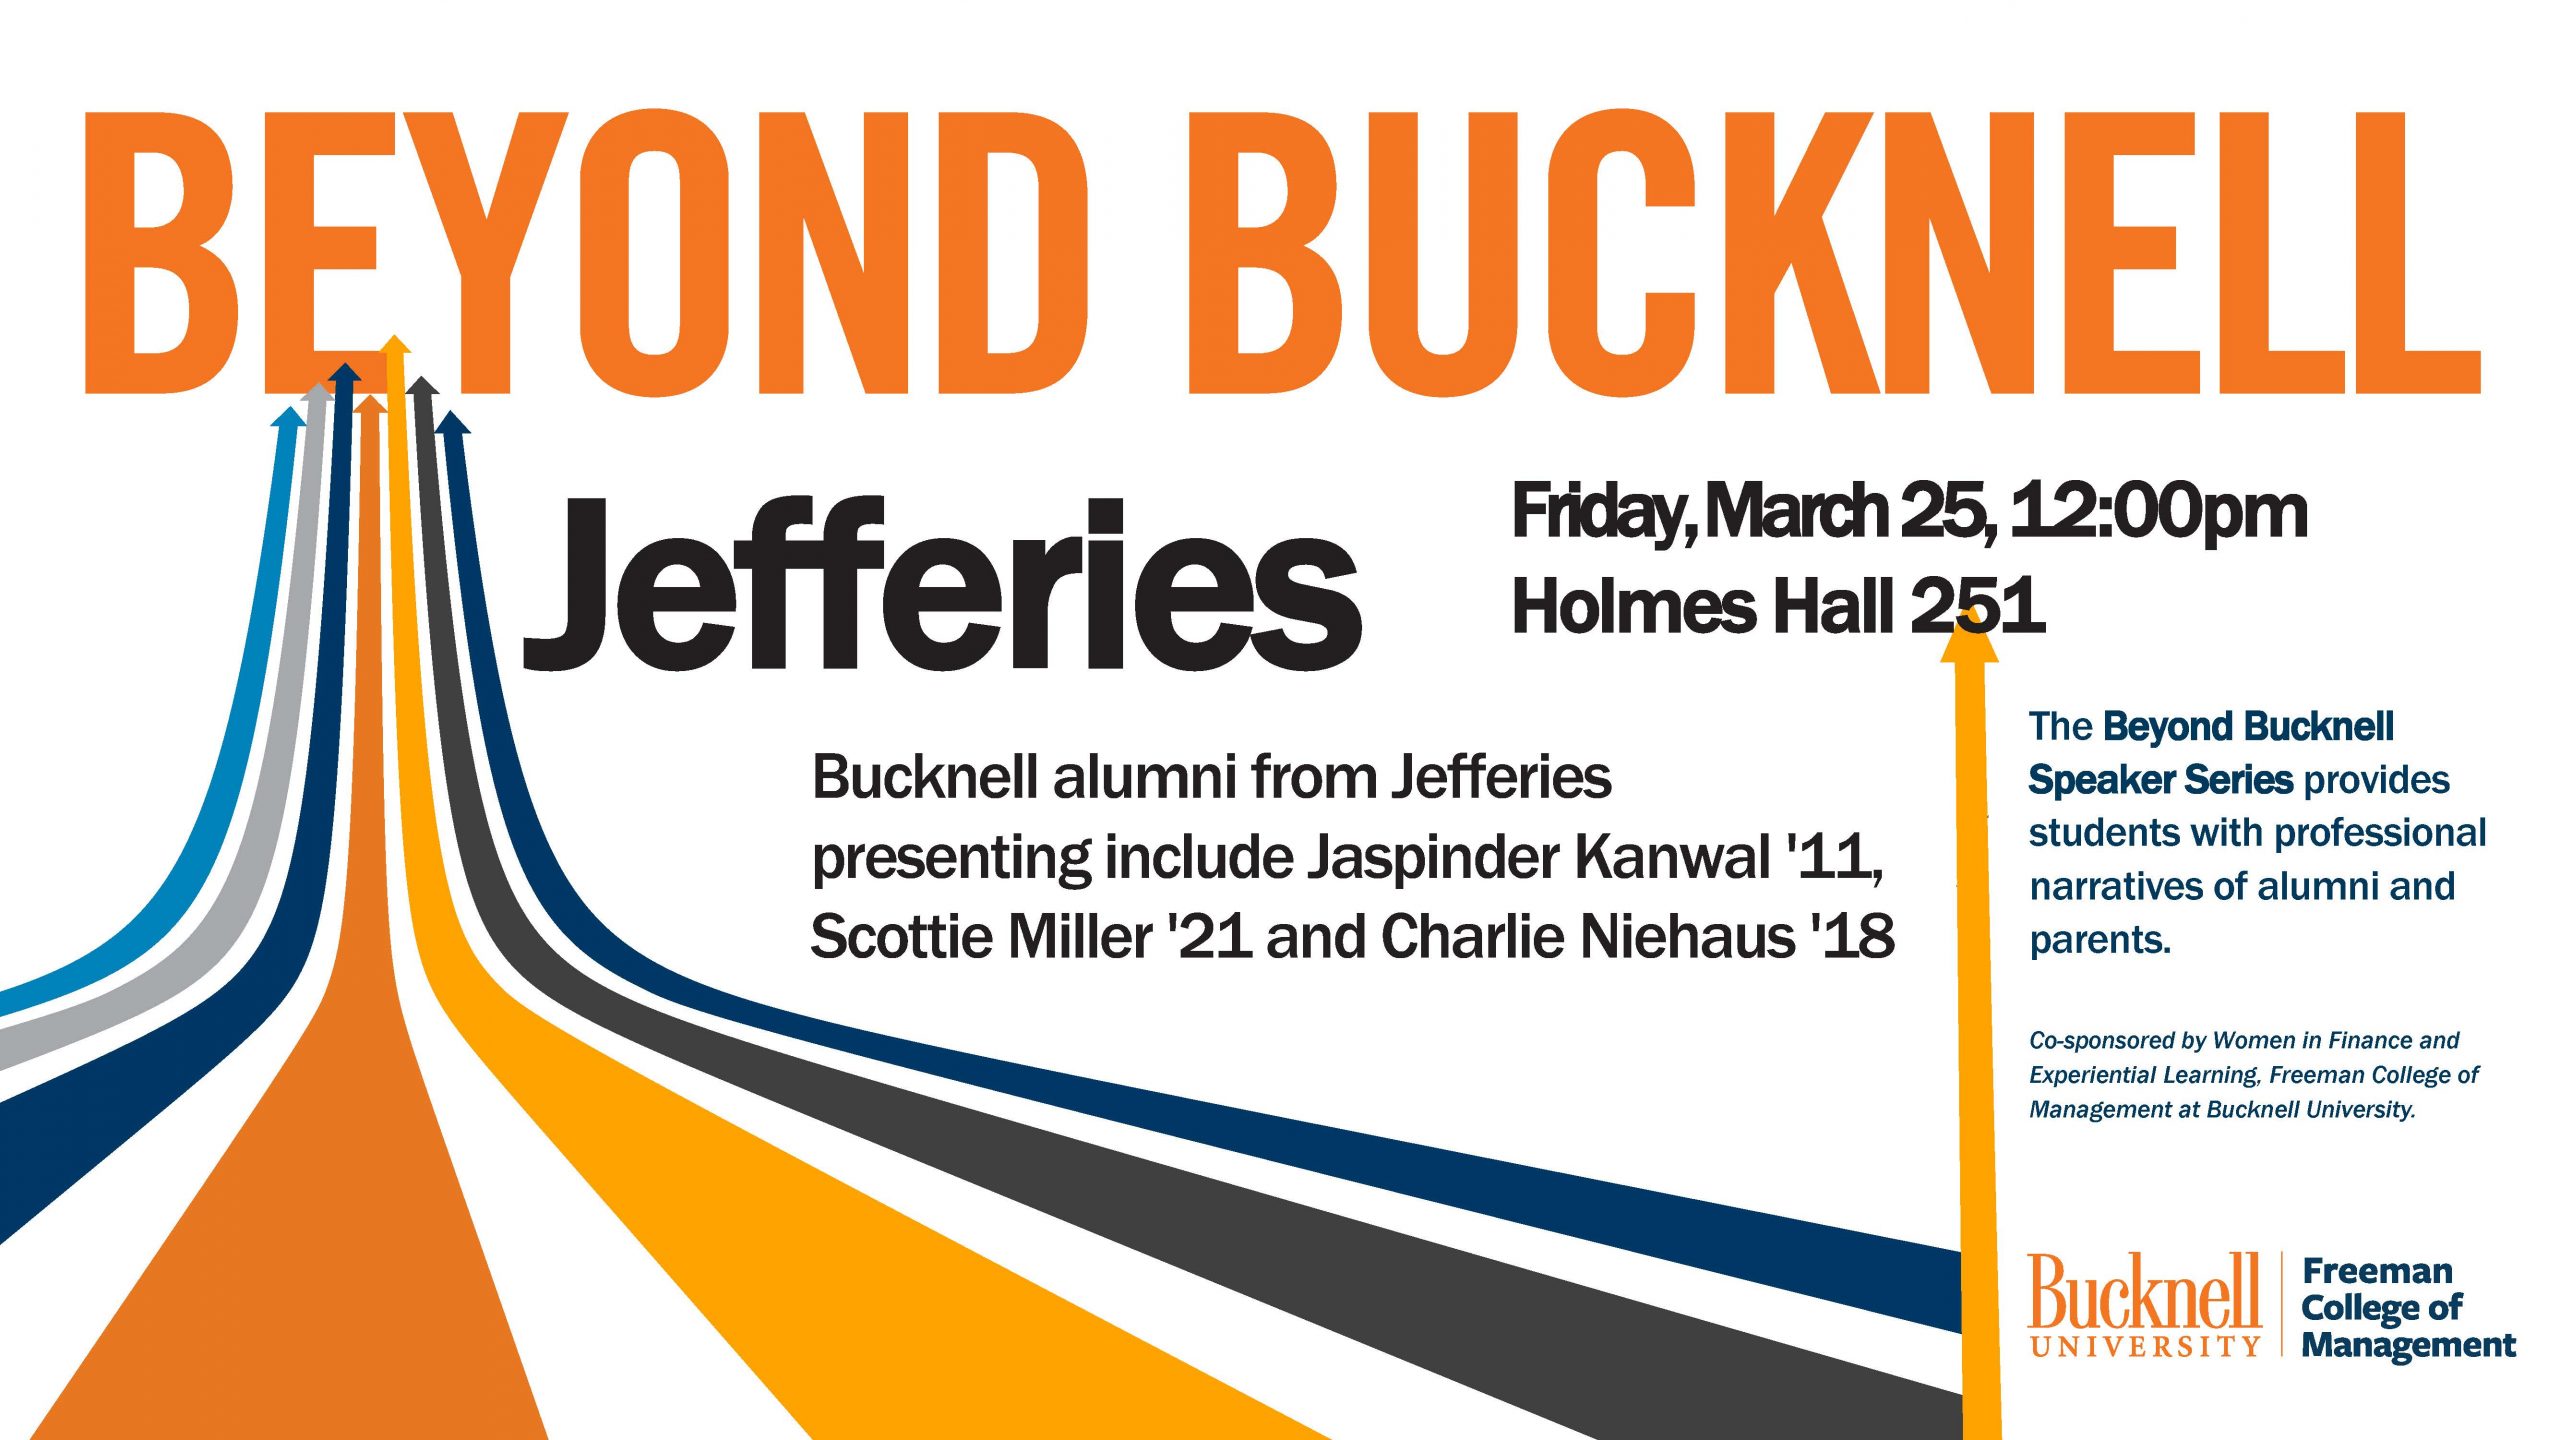 Beyond Bucknell Speaker Series presents Jefferies